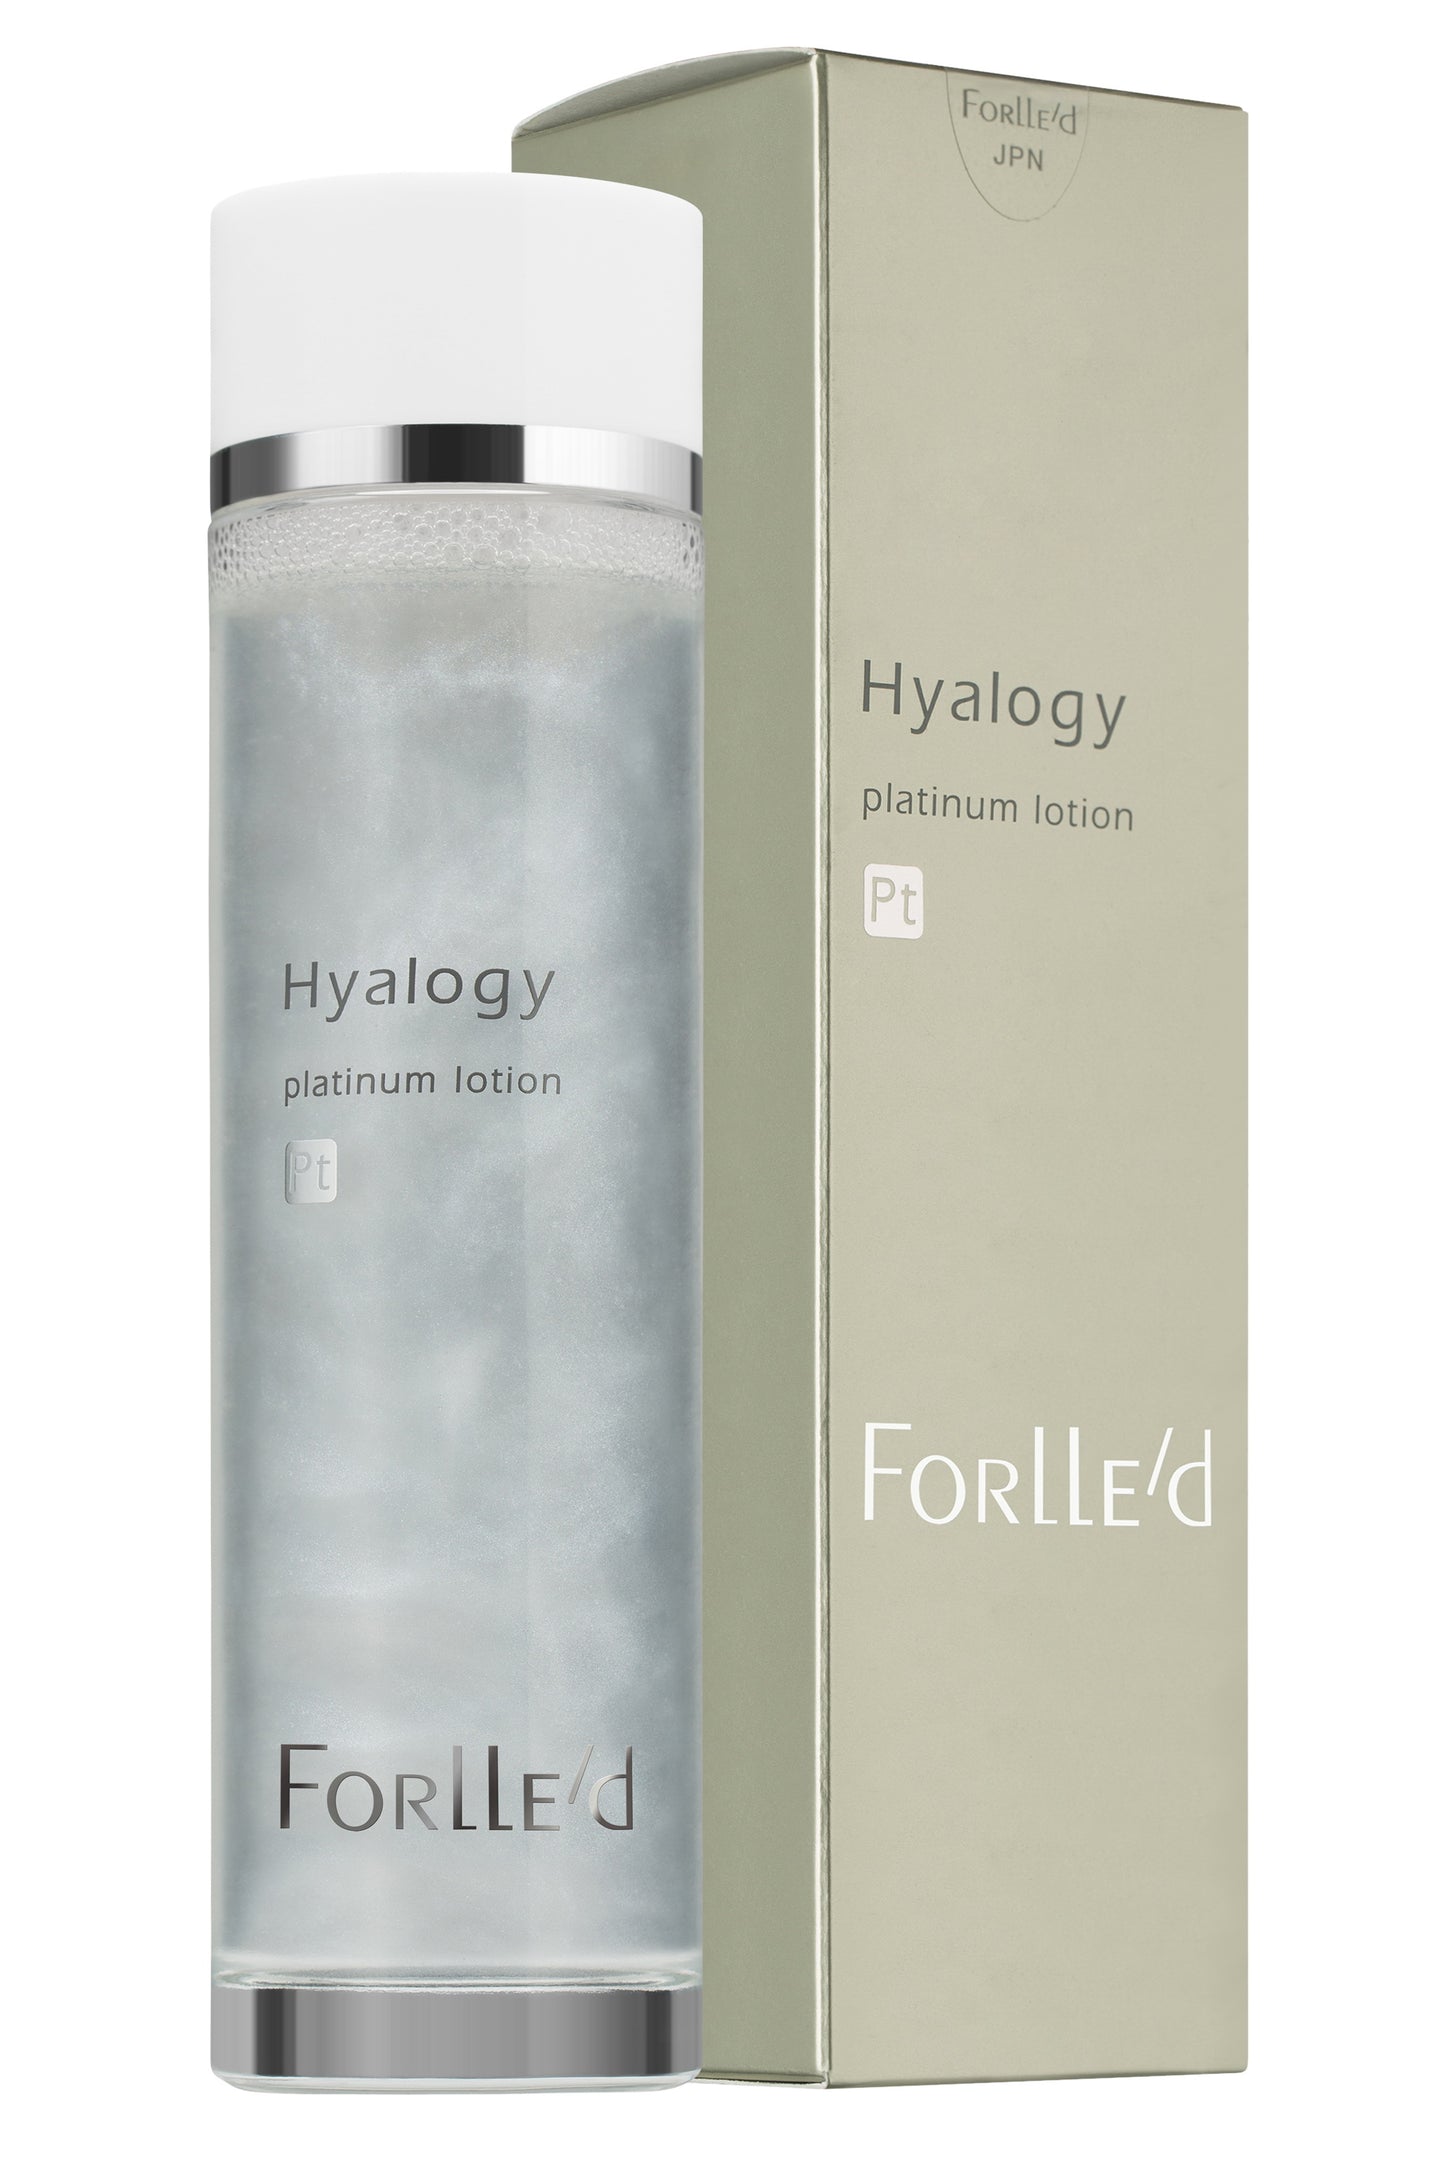 Forlle'd Hyalogy Platinum Lotion 120 ml